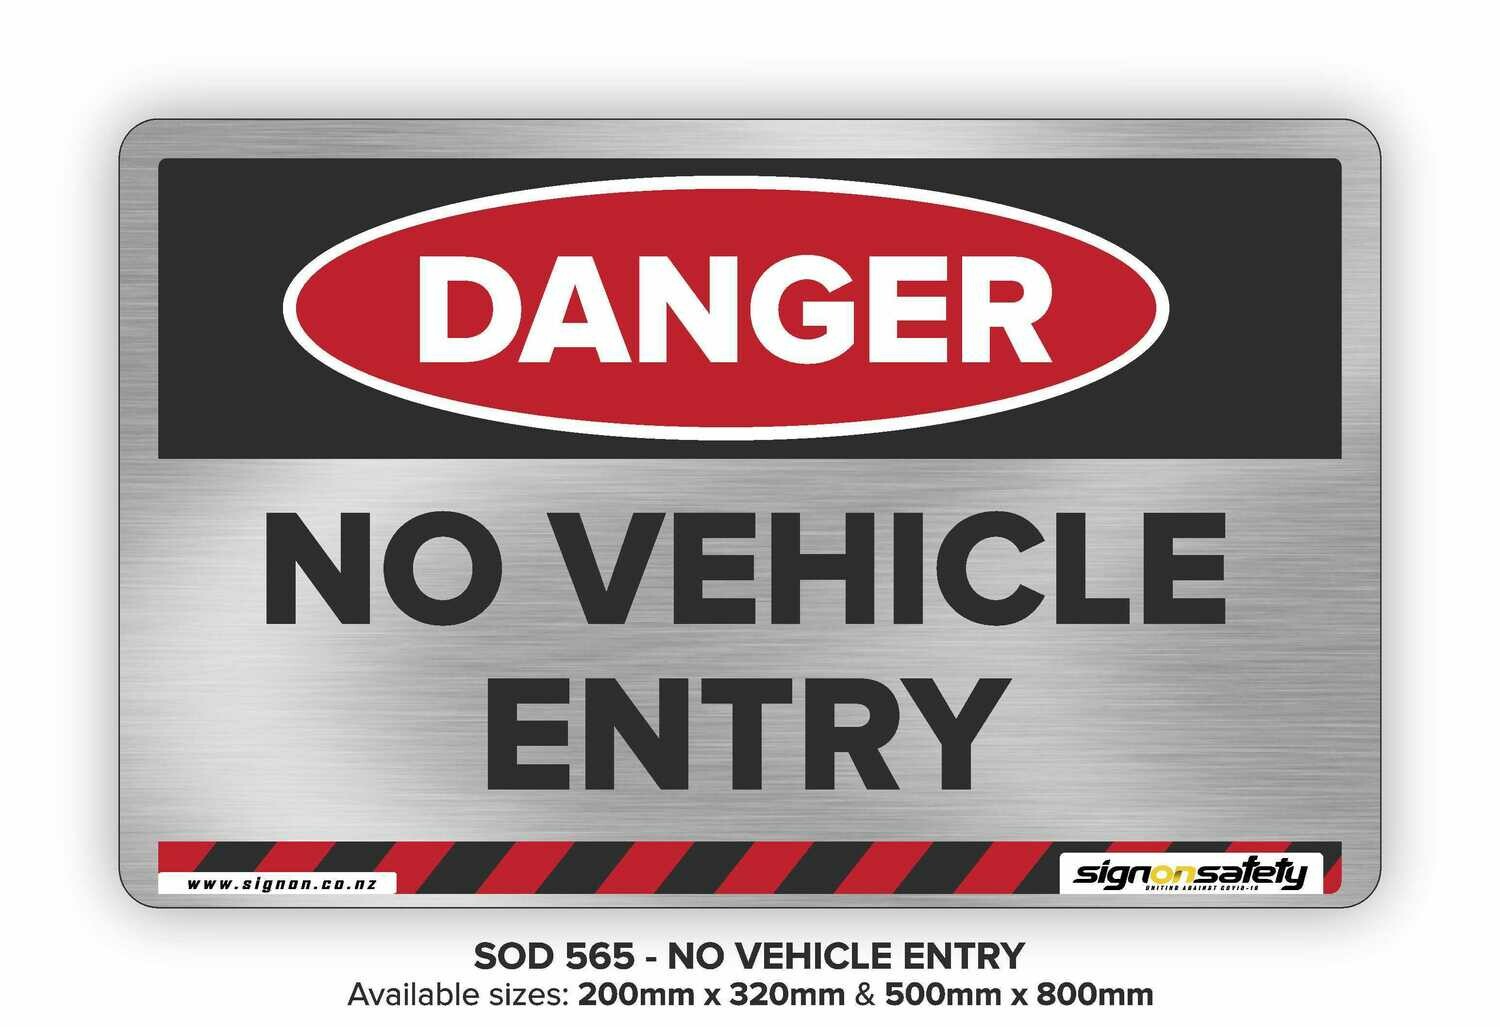 Danger - No Vehicle Entry